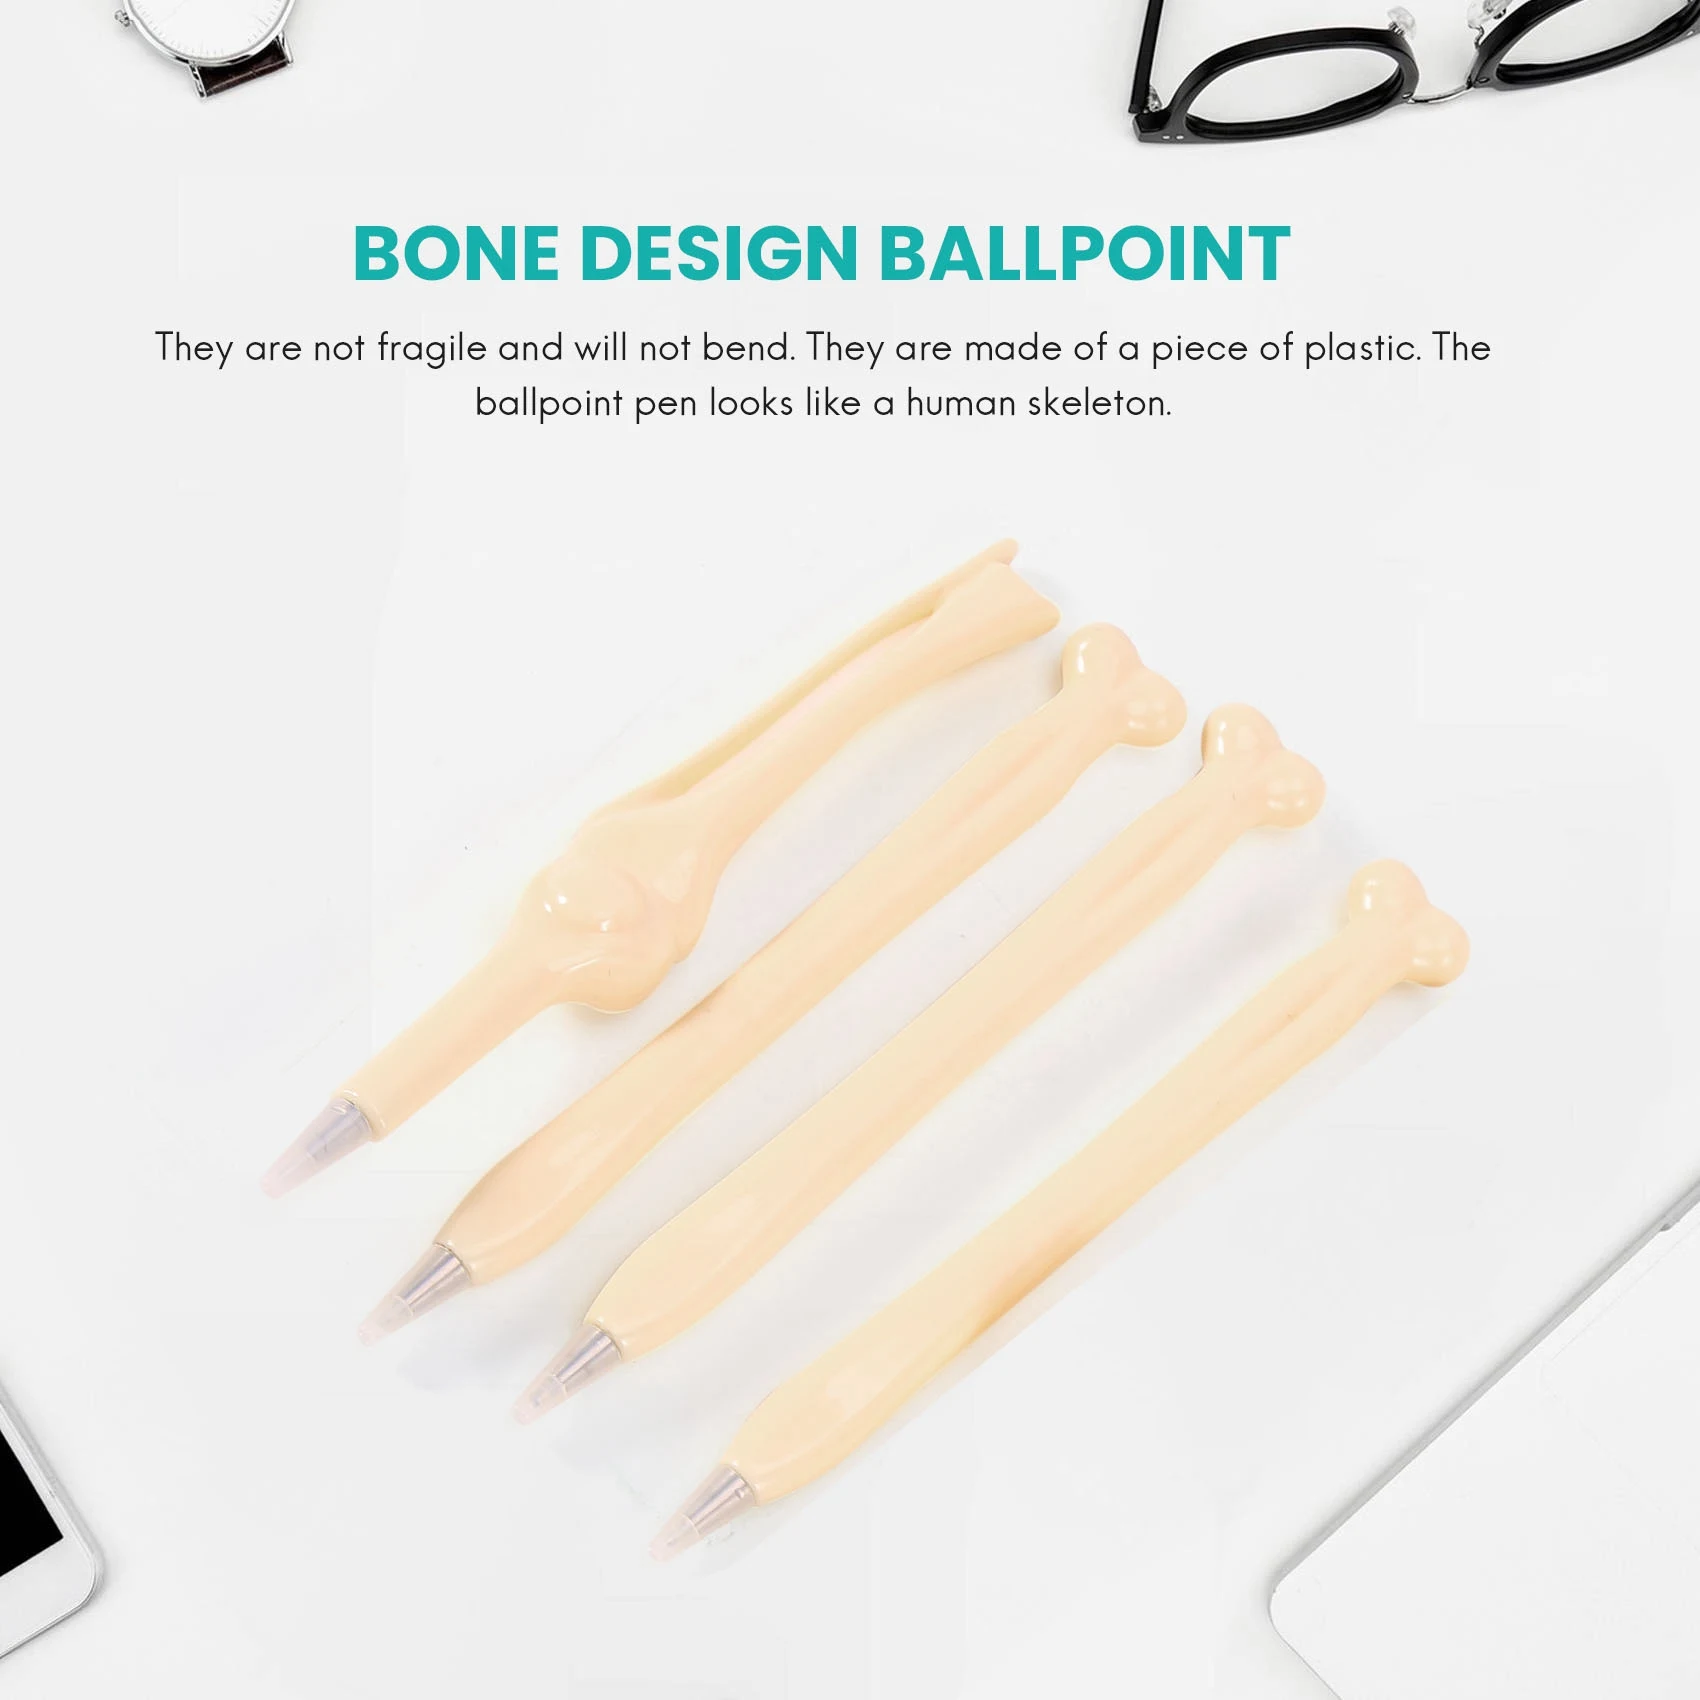 

25PCS Bone Design Ballpoint Pens with Black Ink for Artist, Doctor, Nurse , School, Office, Party